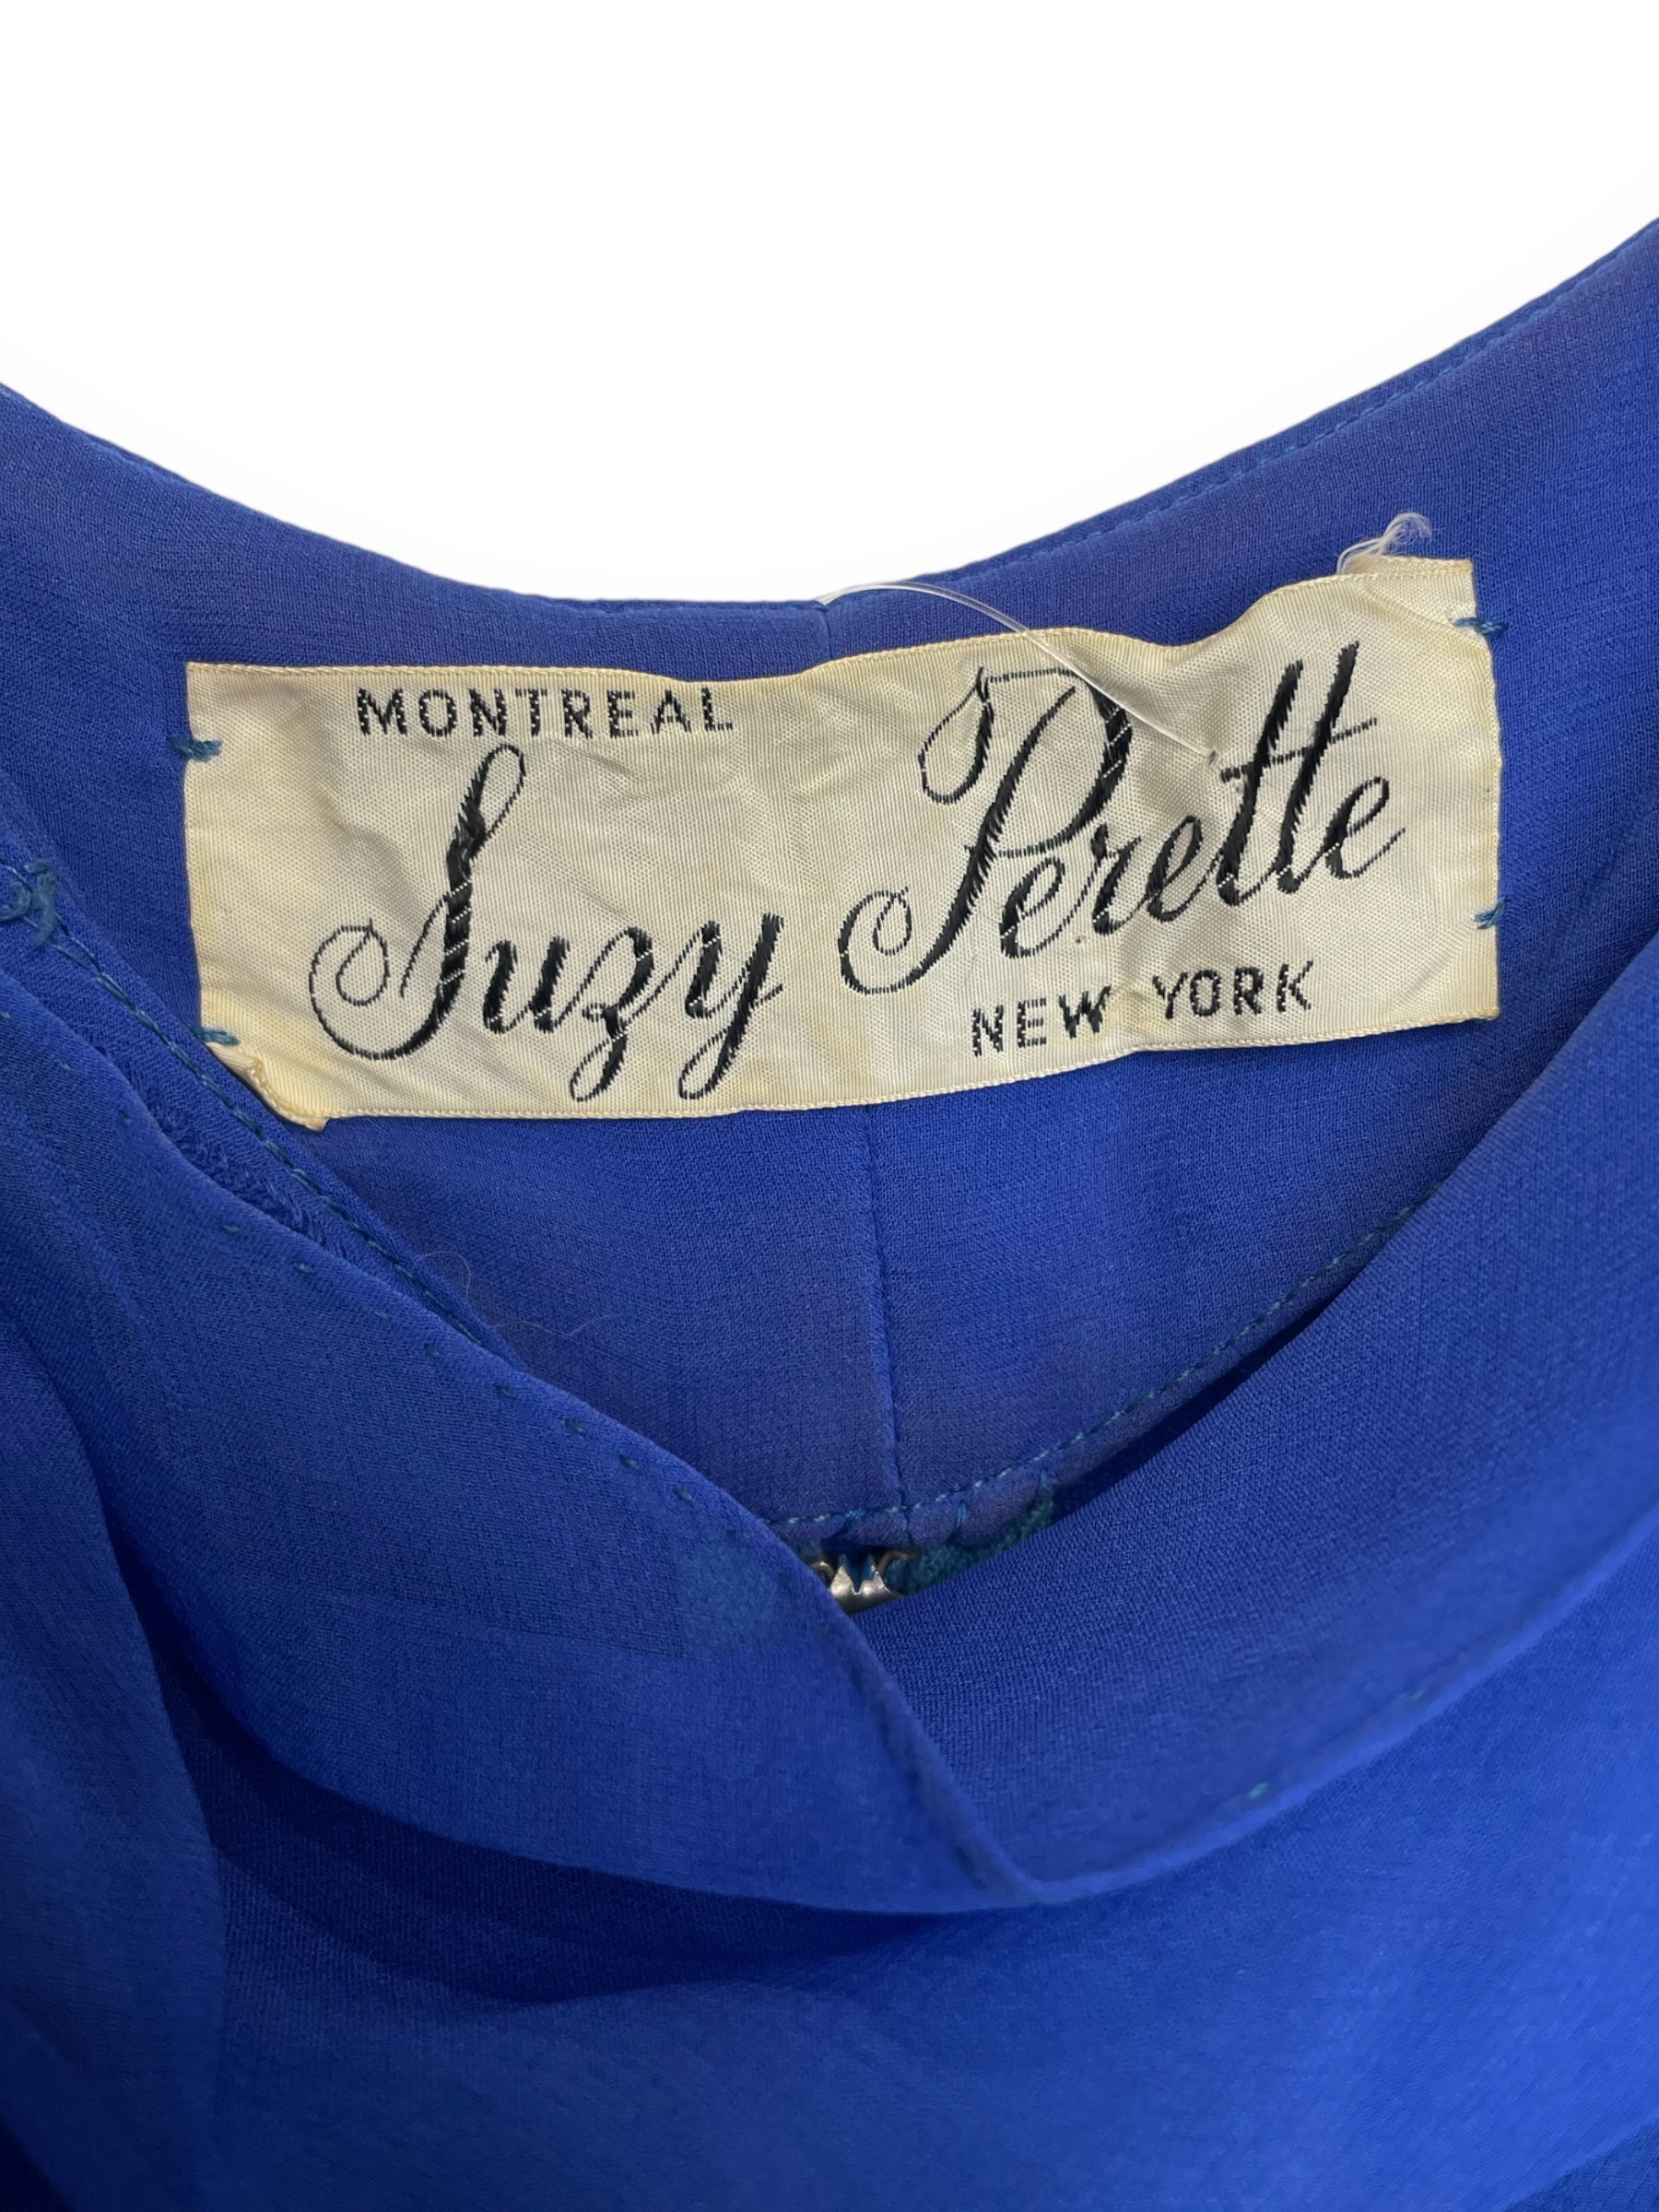 Suzy Perette's Cobalt Dress